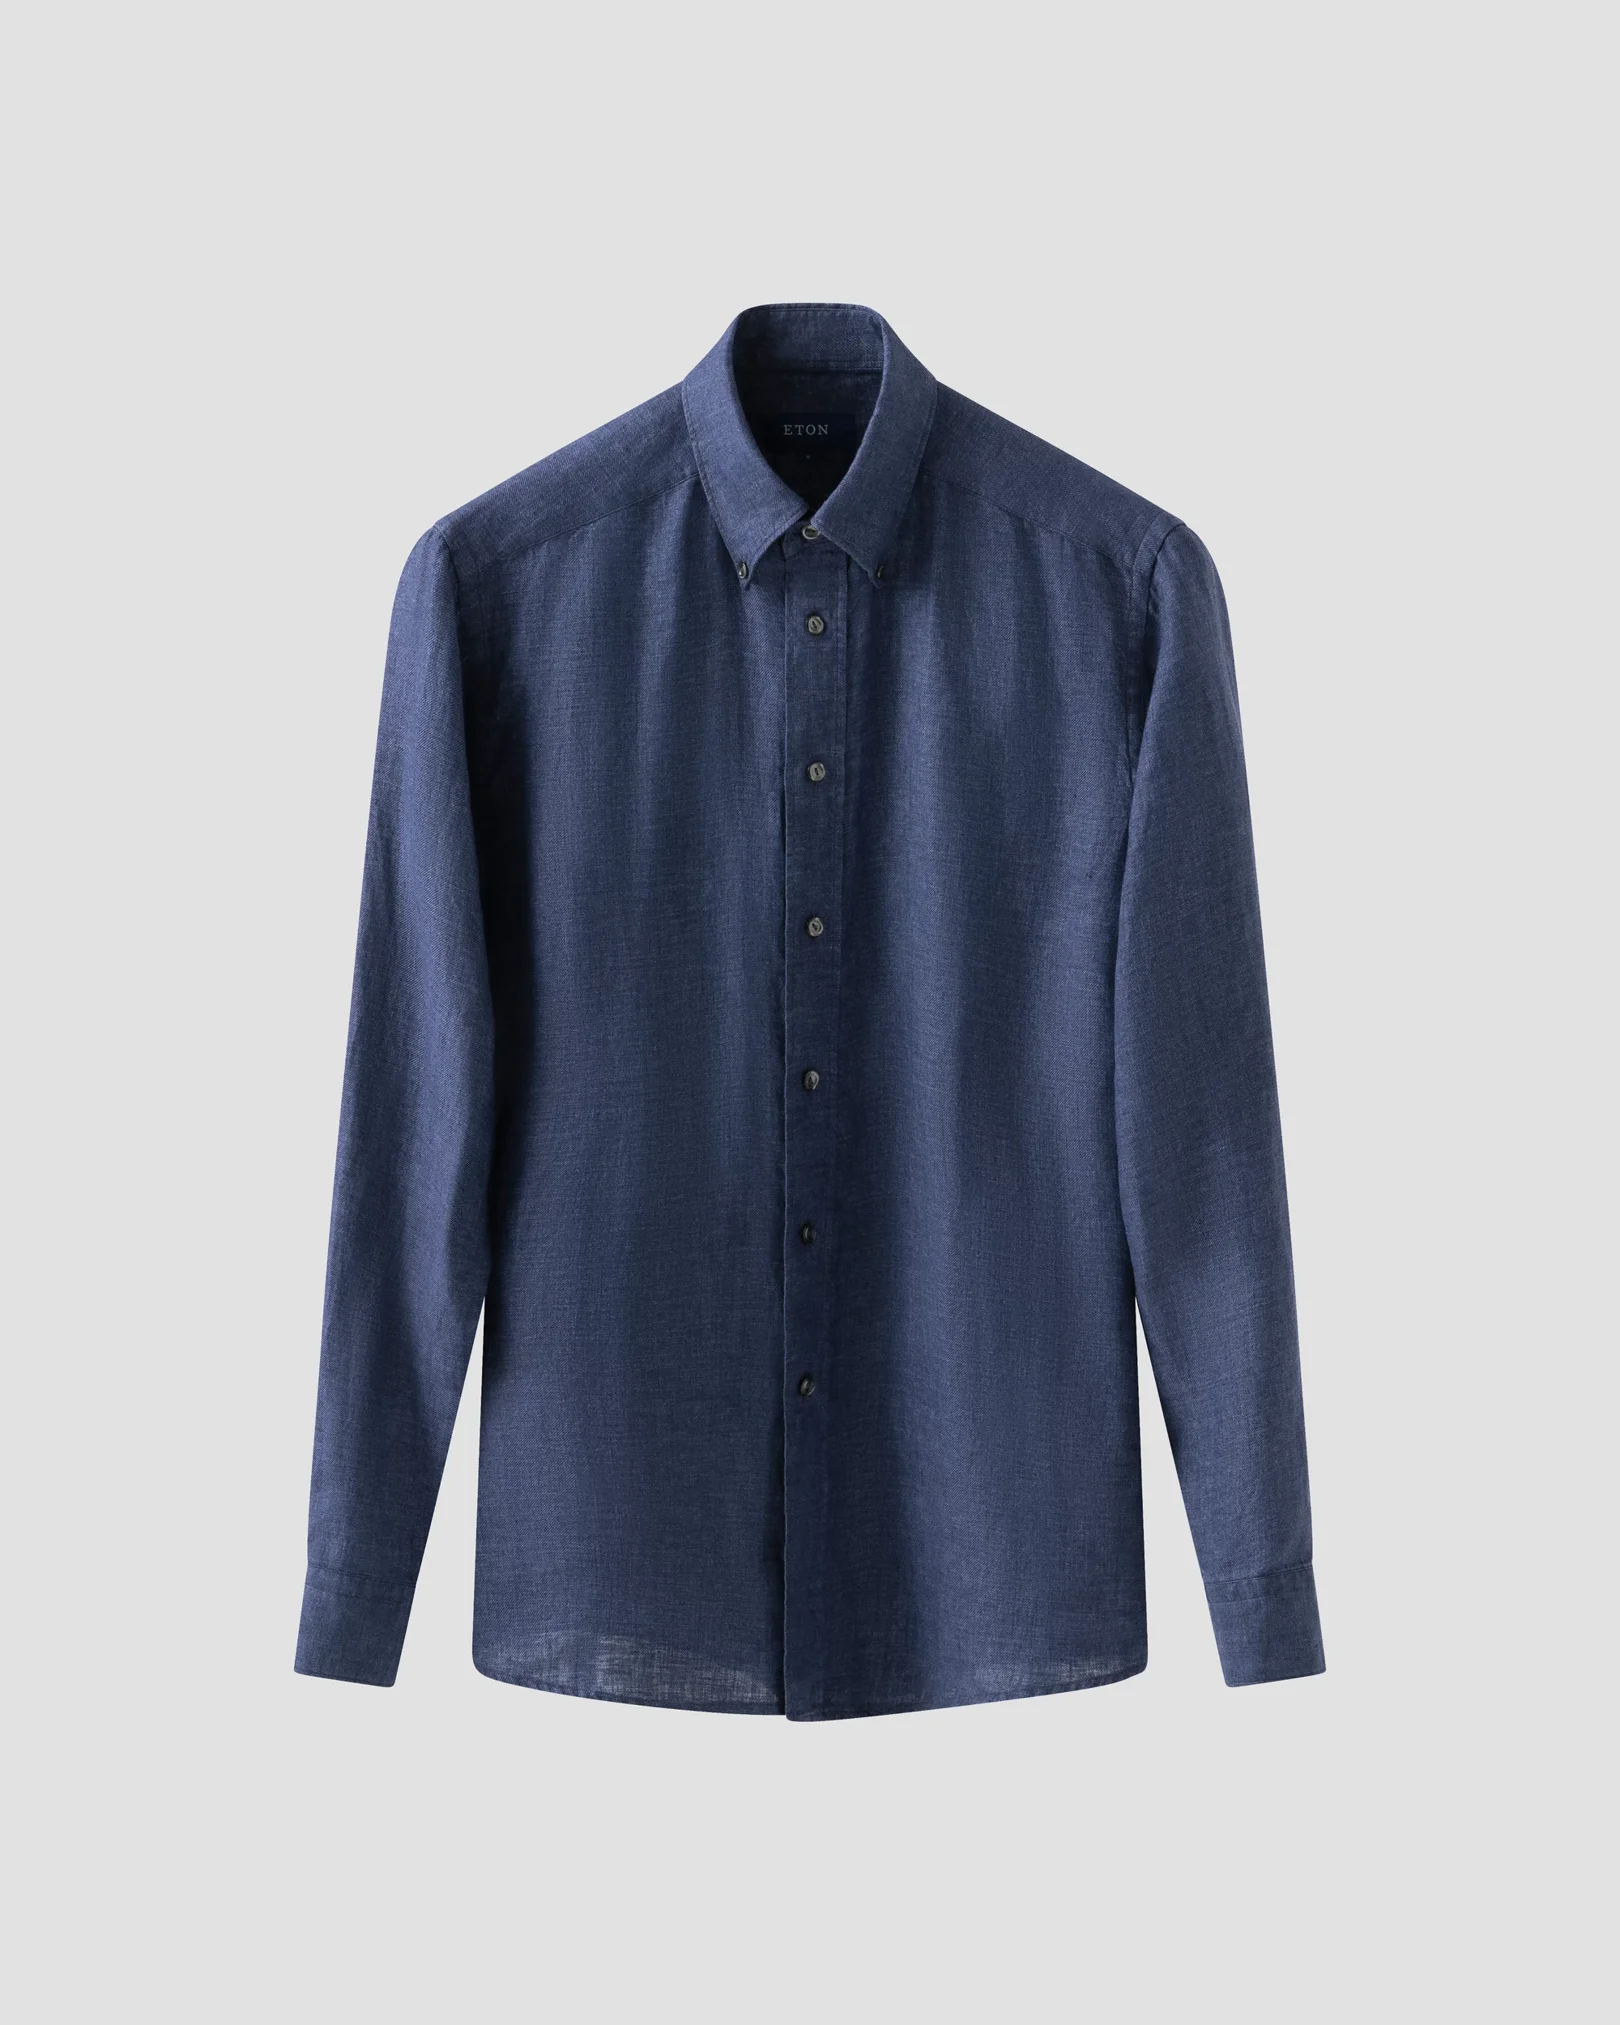 Eton - solid navy linen shirt button down